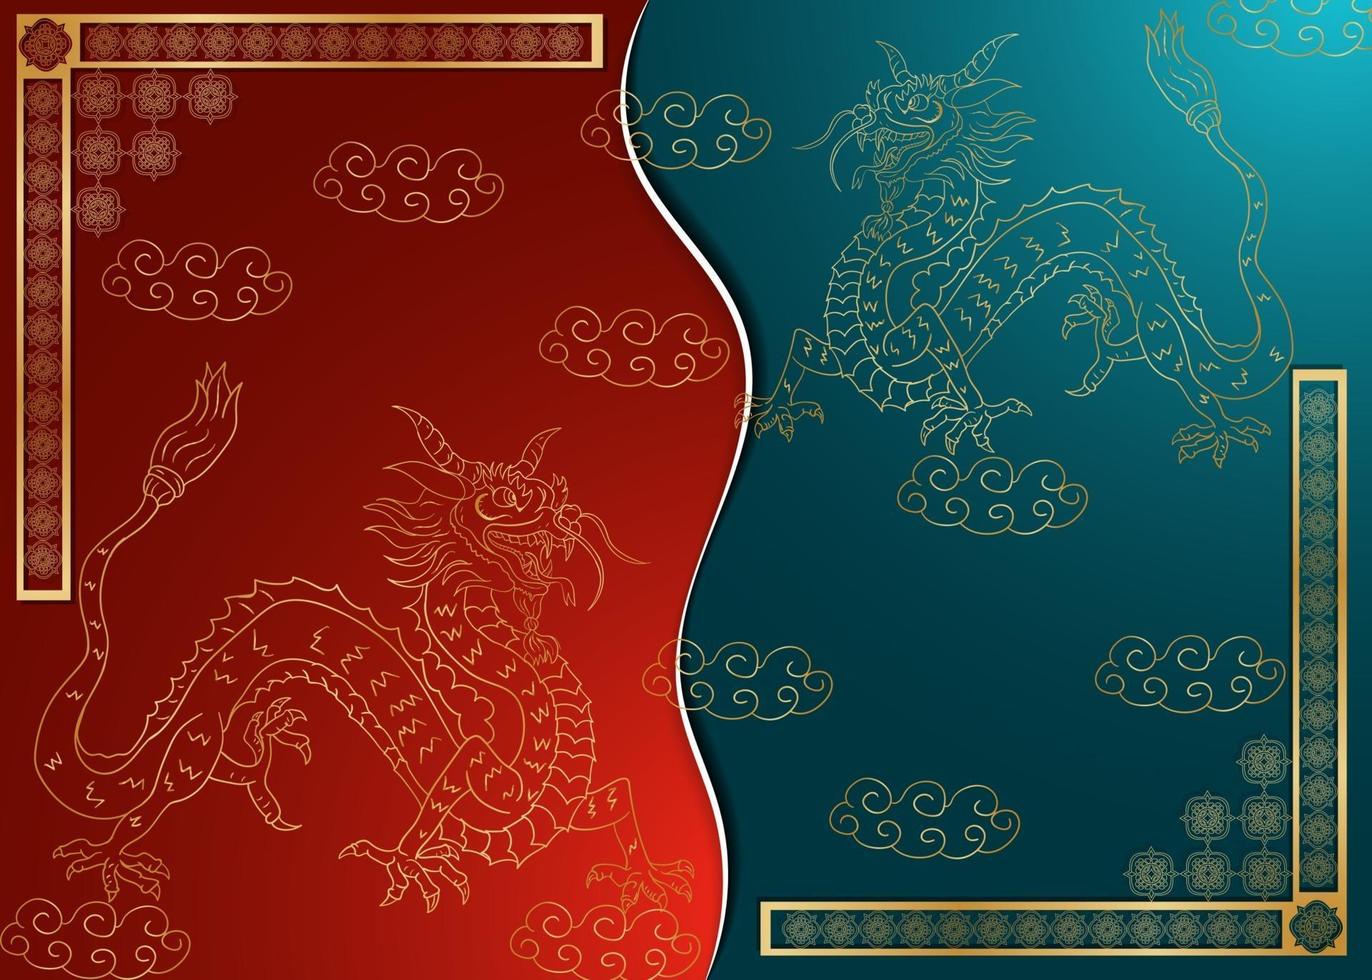 gratulationskort design kinesiskt papper klippt bakgrund uppdelat i två halvor vektor